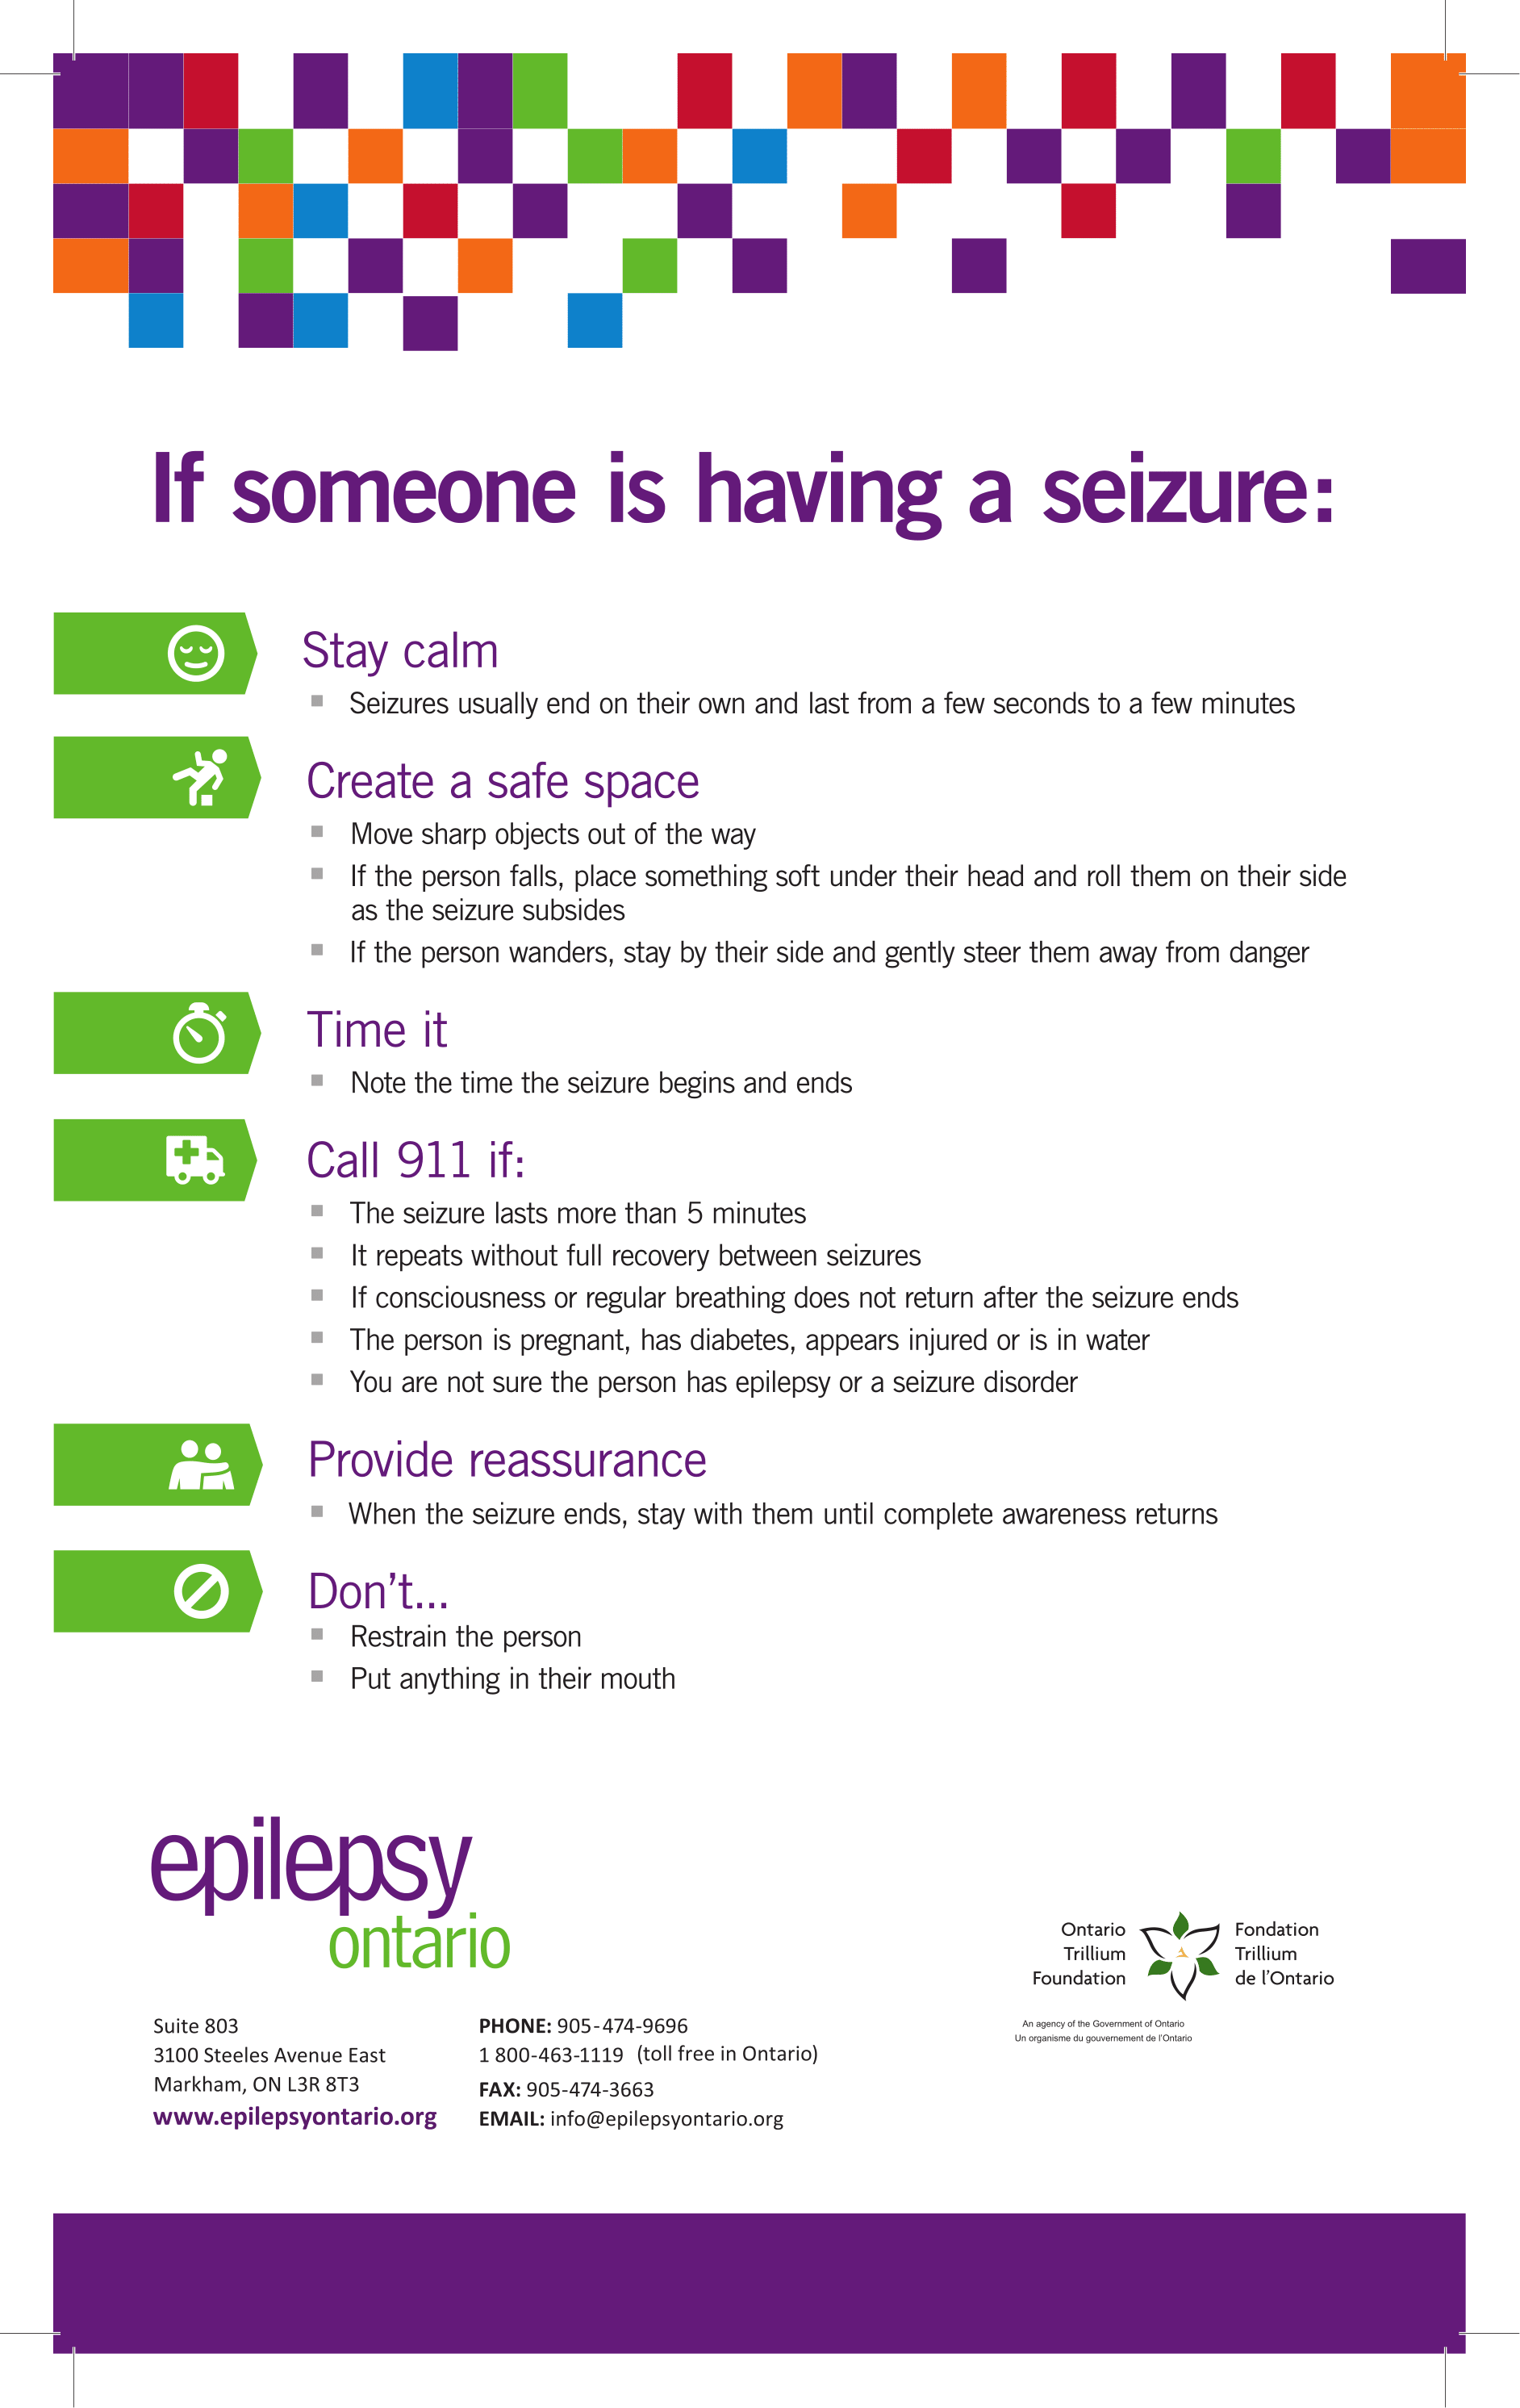 Poster describing epilepsy first aid.